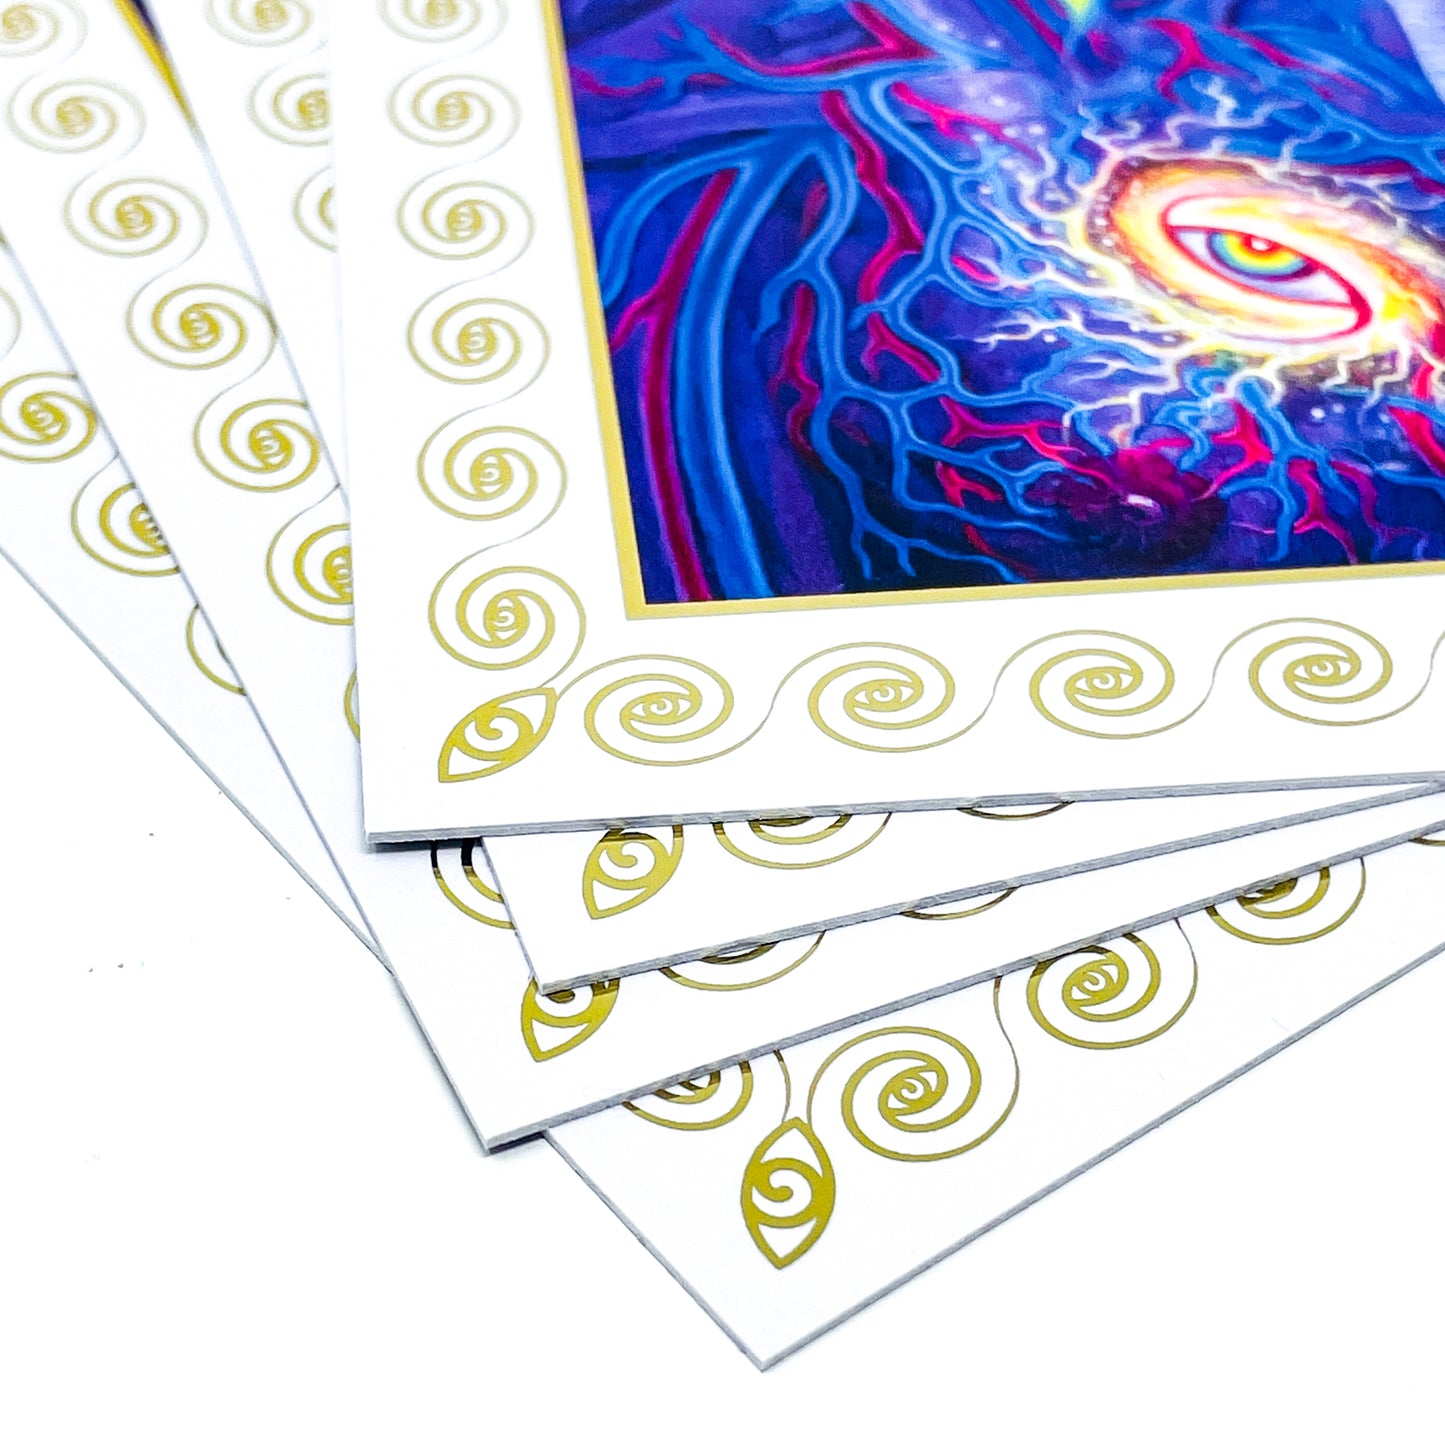 Cosmic Creativity - Prayer Card